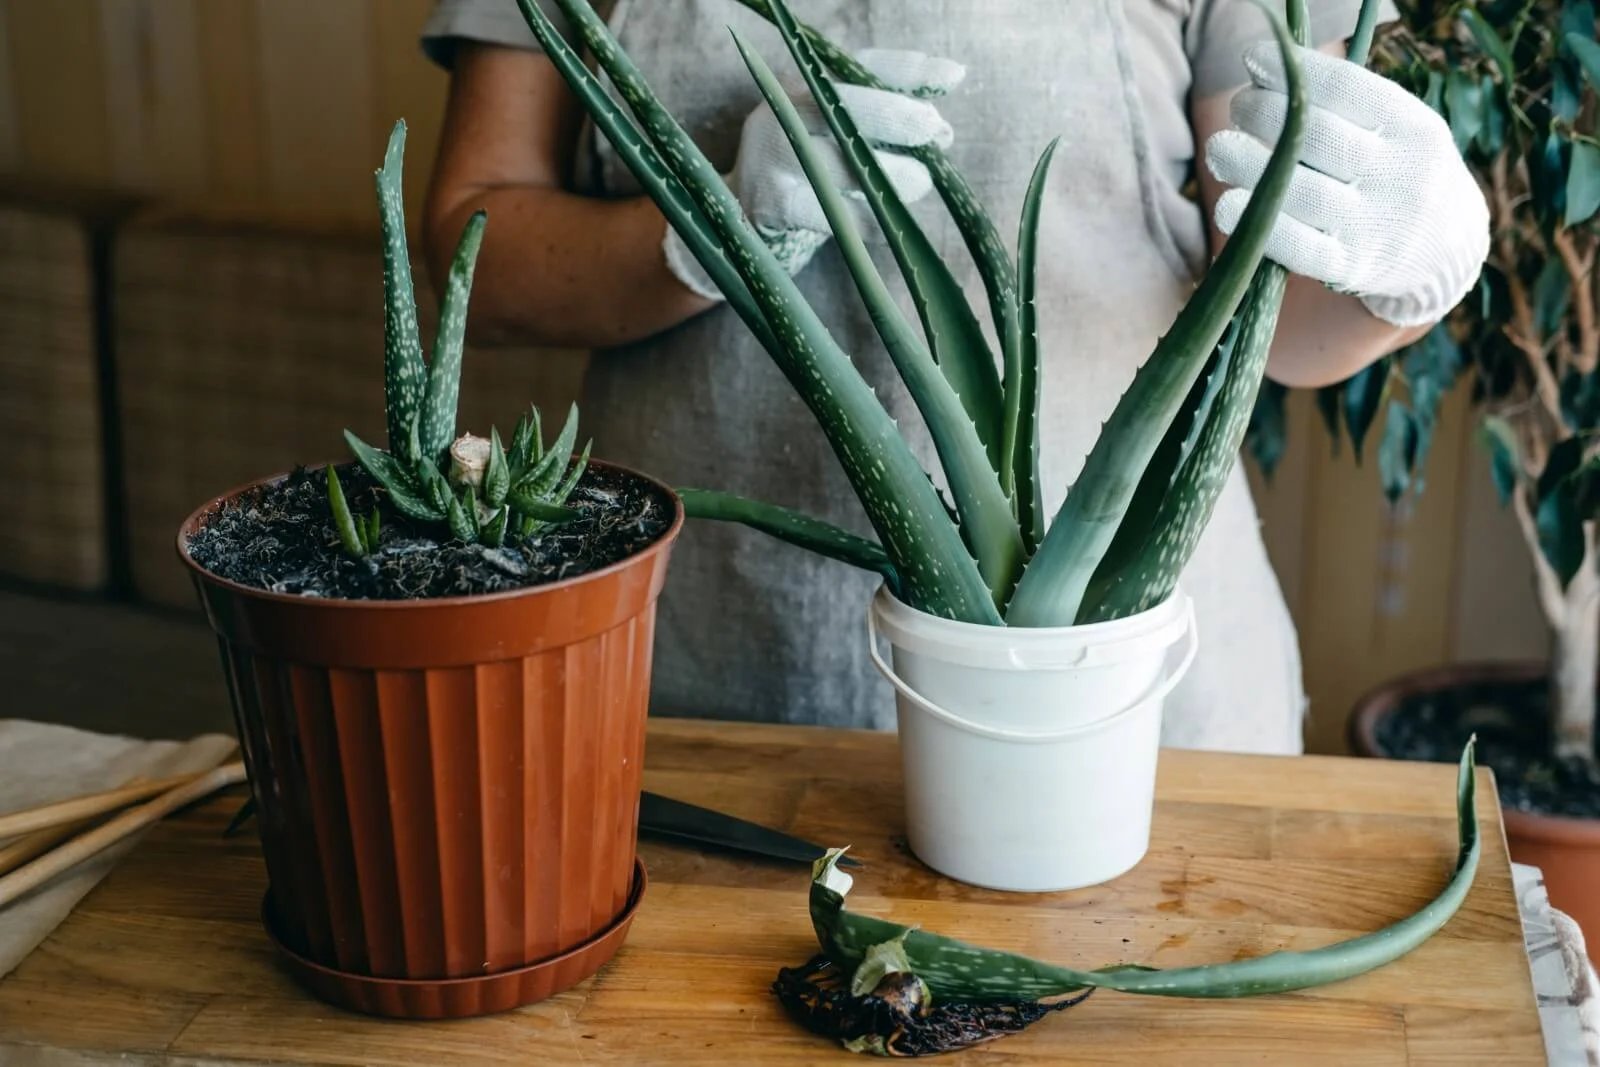 How To Trim An Aloe Vera Plant